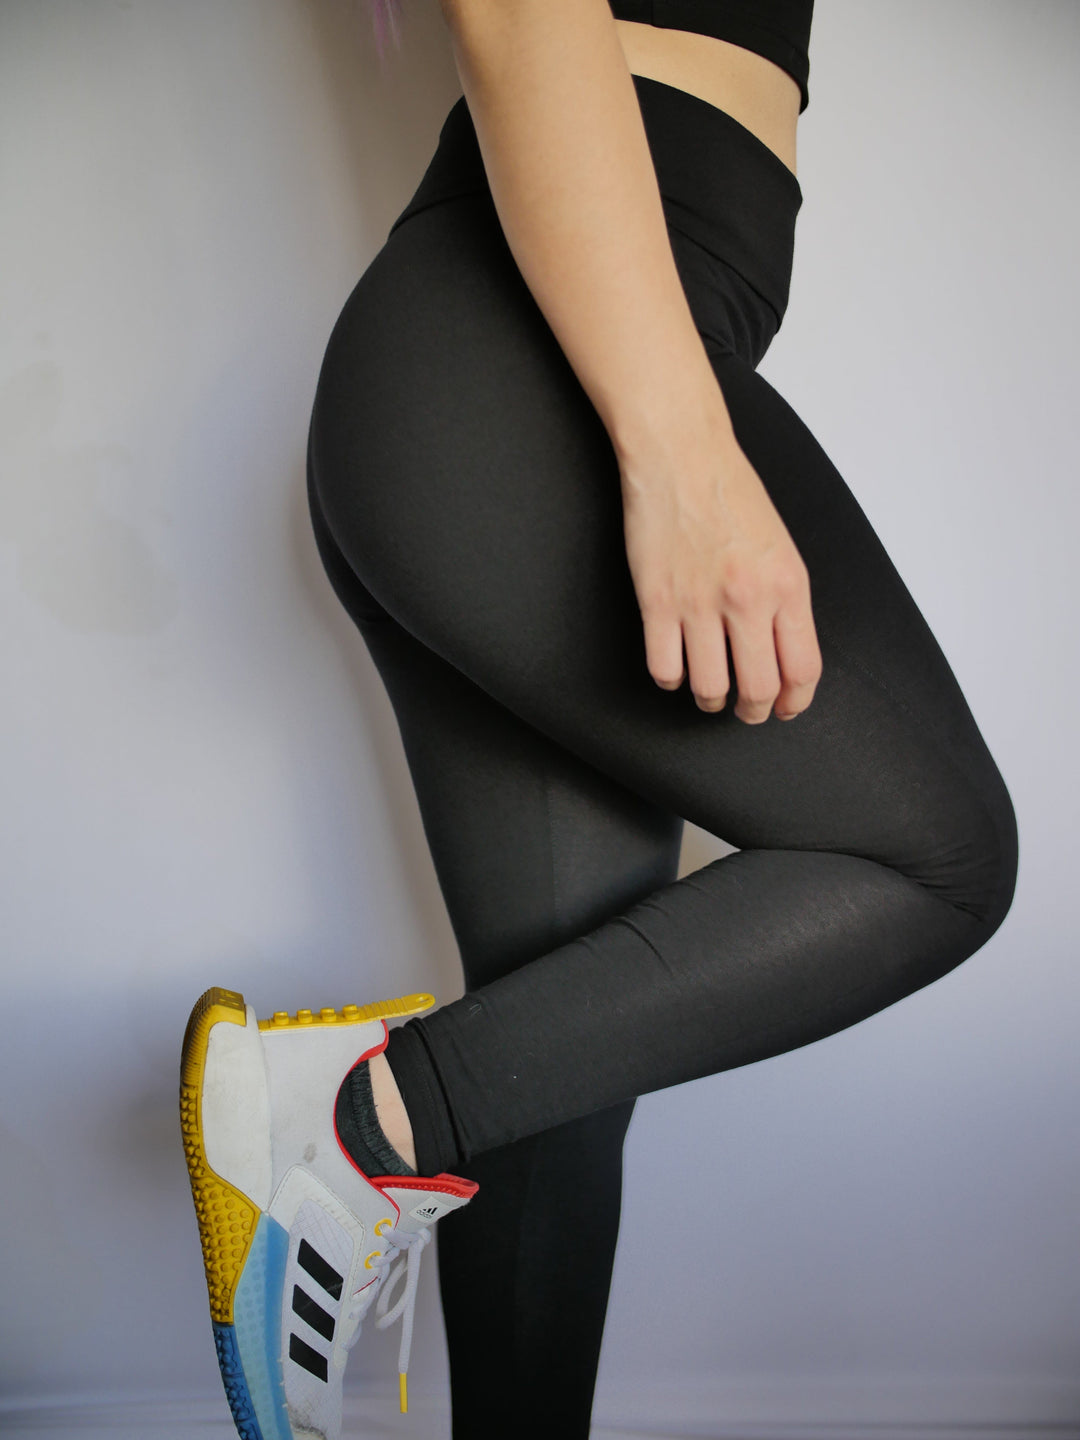 PixelThat Punderwear Yoga Pants Thick Thighs Save Lives Yoga Pants